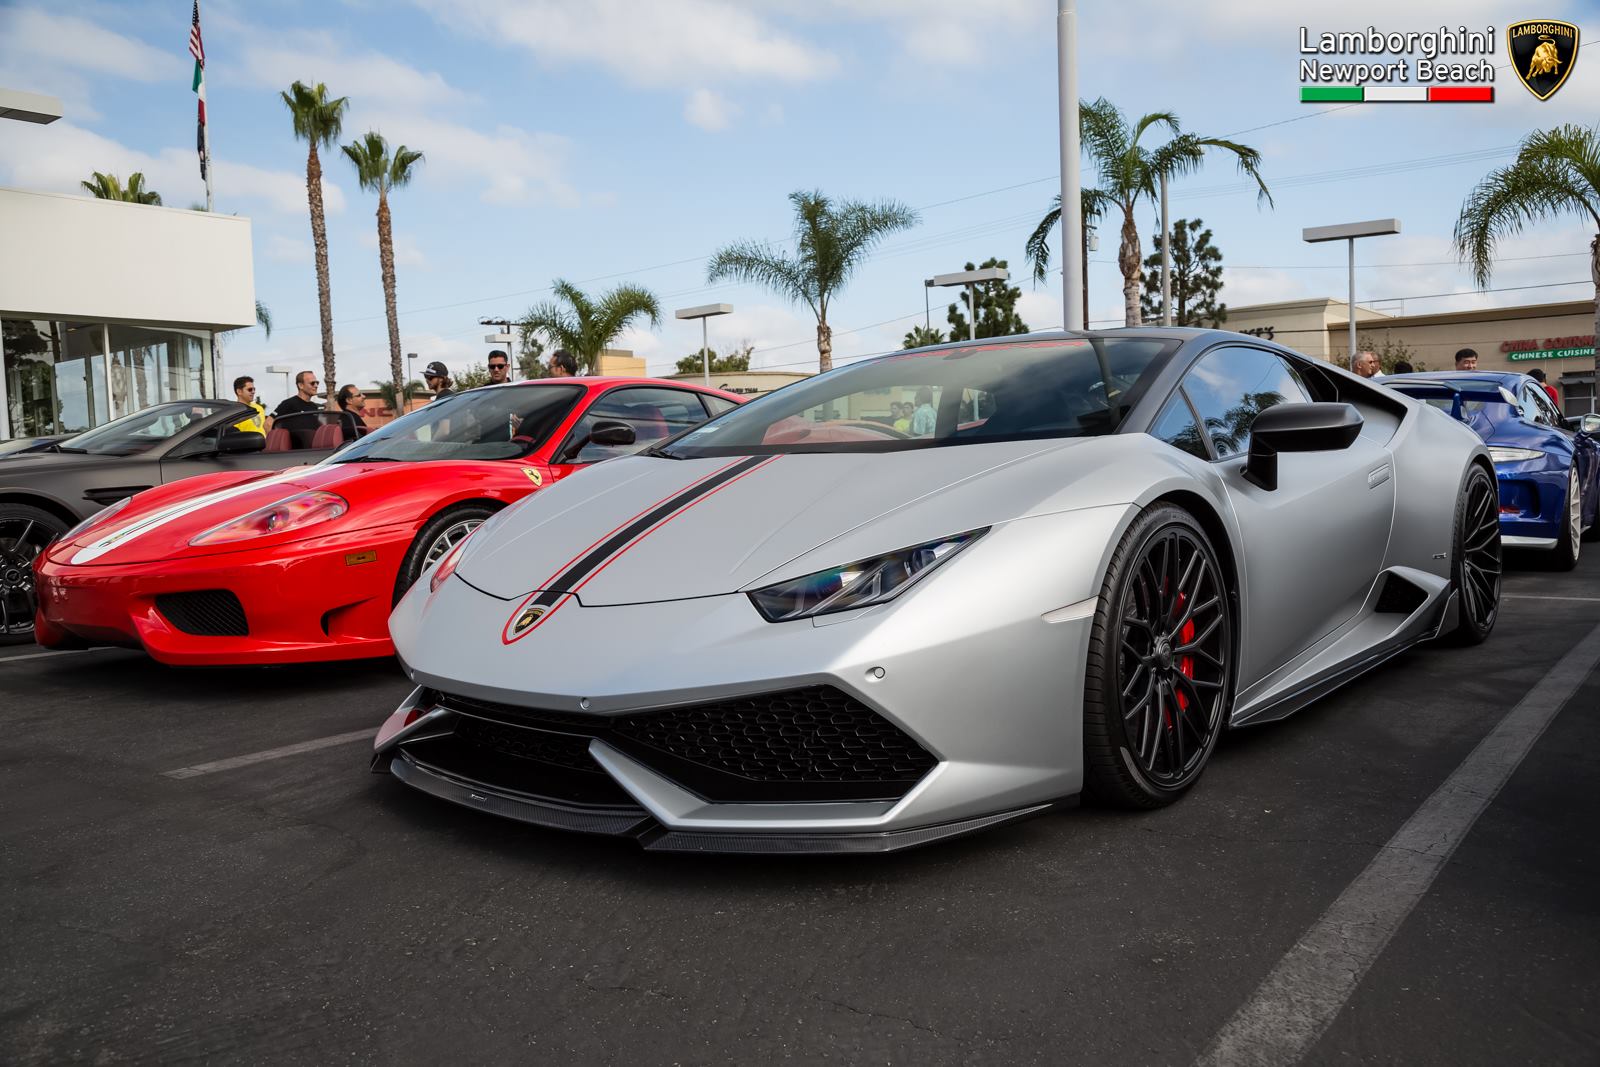 Lamborghini Newport Beach Supercar Show - GTspirit